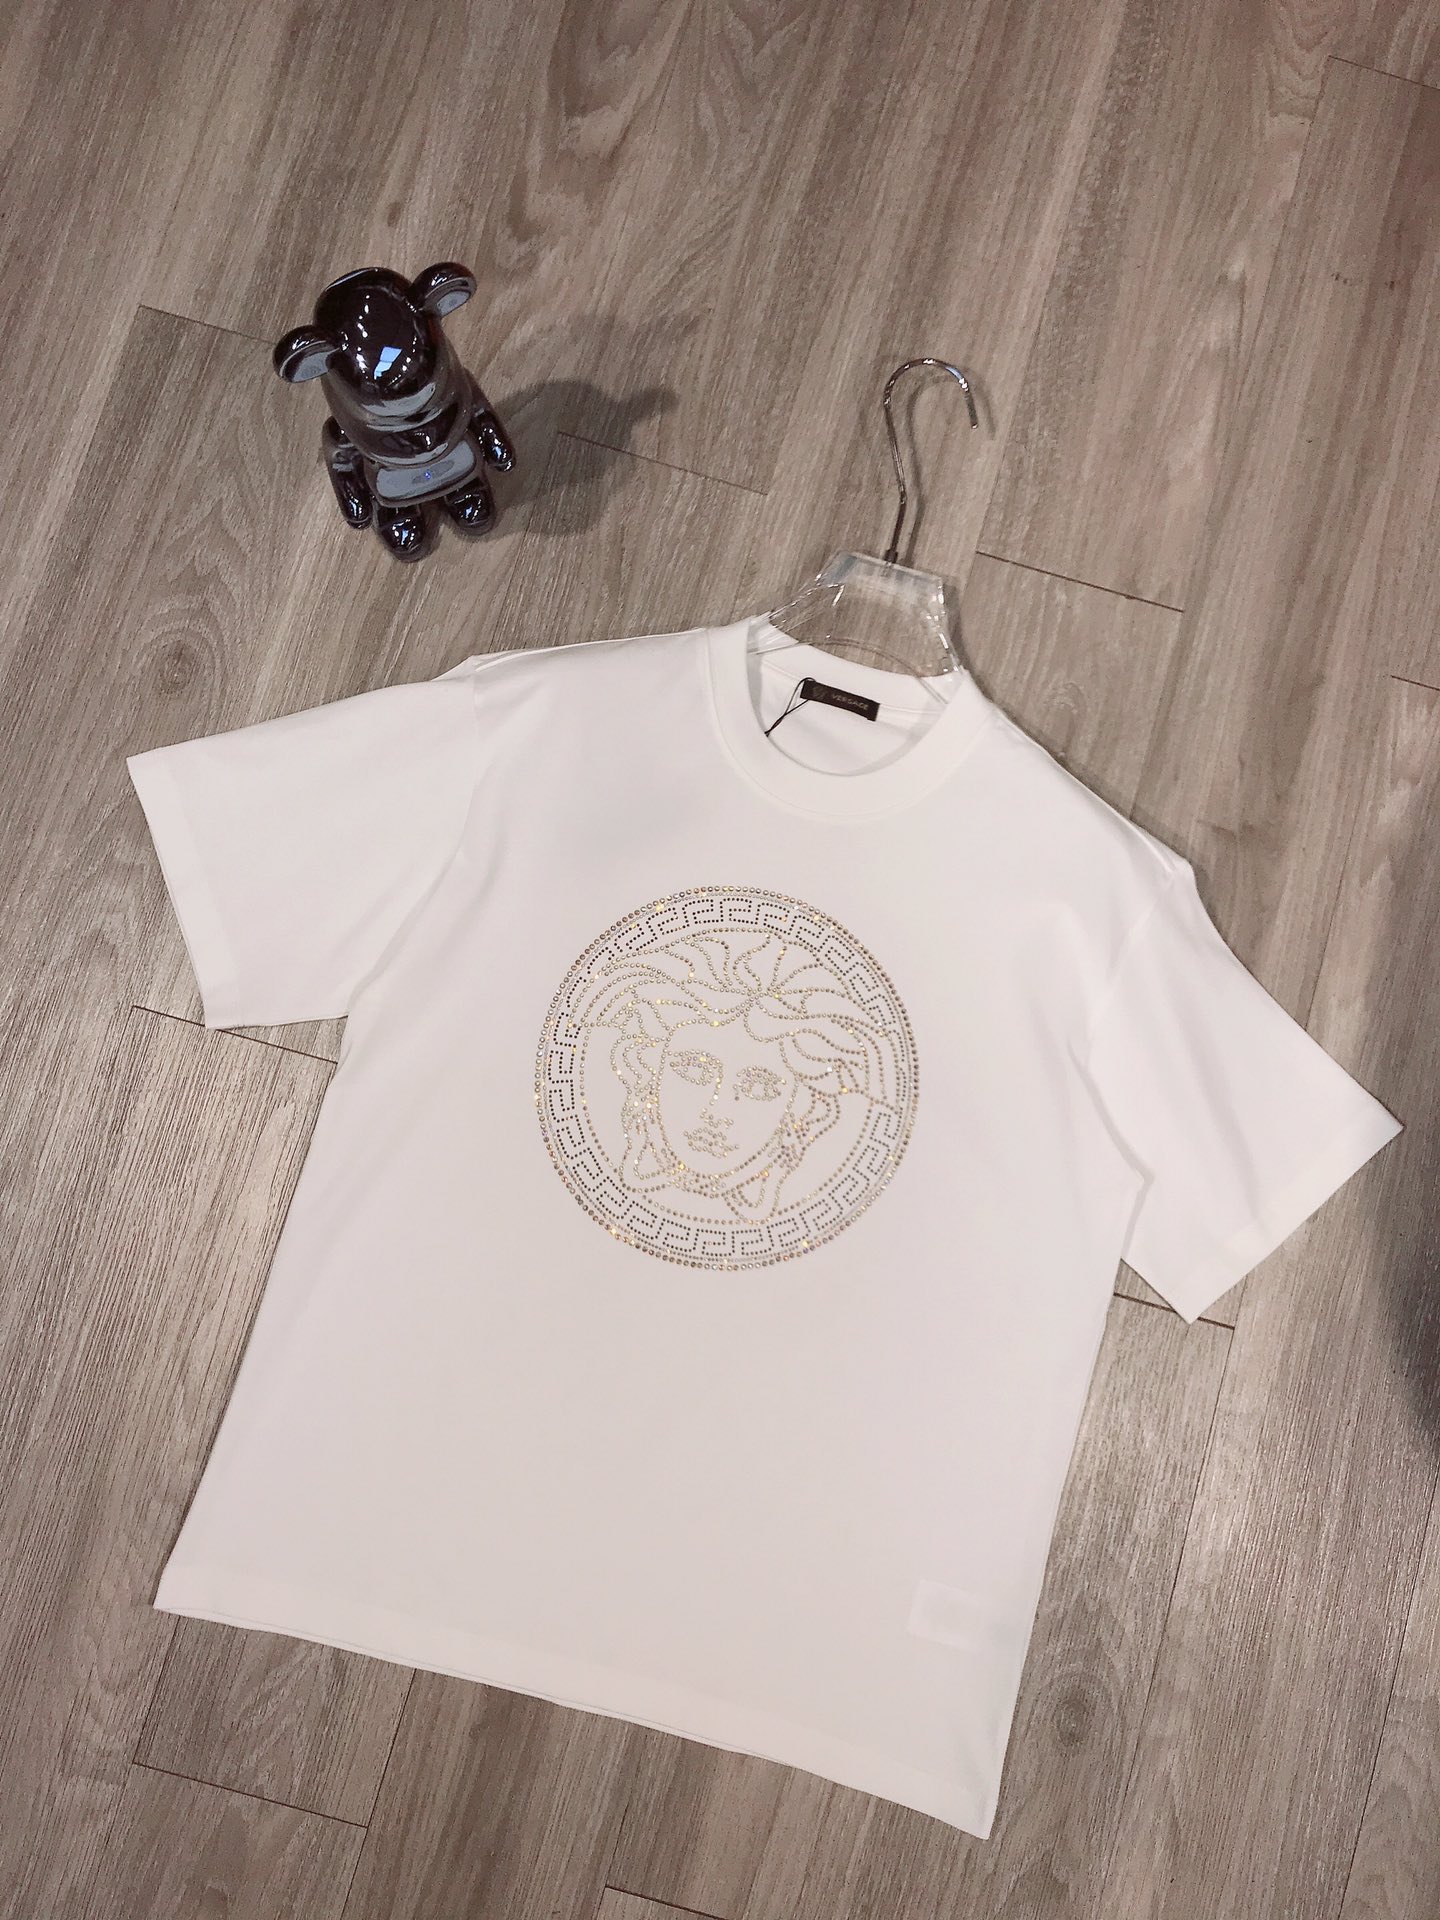 Versace Clothing T-Shirt Black White Men Cotton Mercerized Spring Collection Fashion Short Sleeve